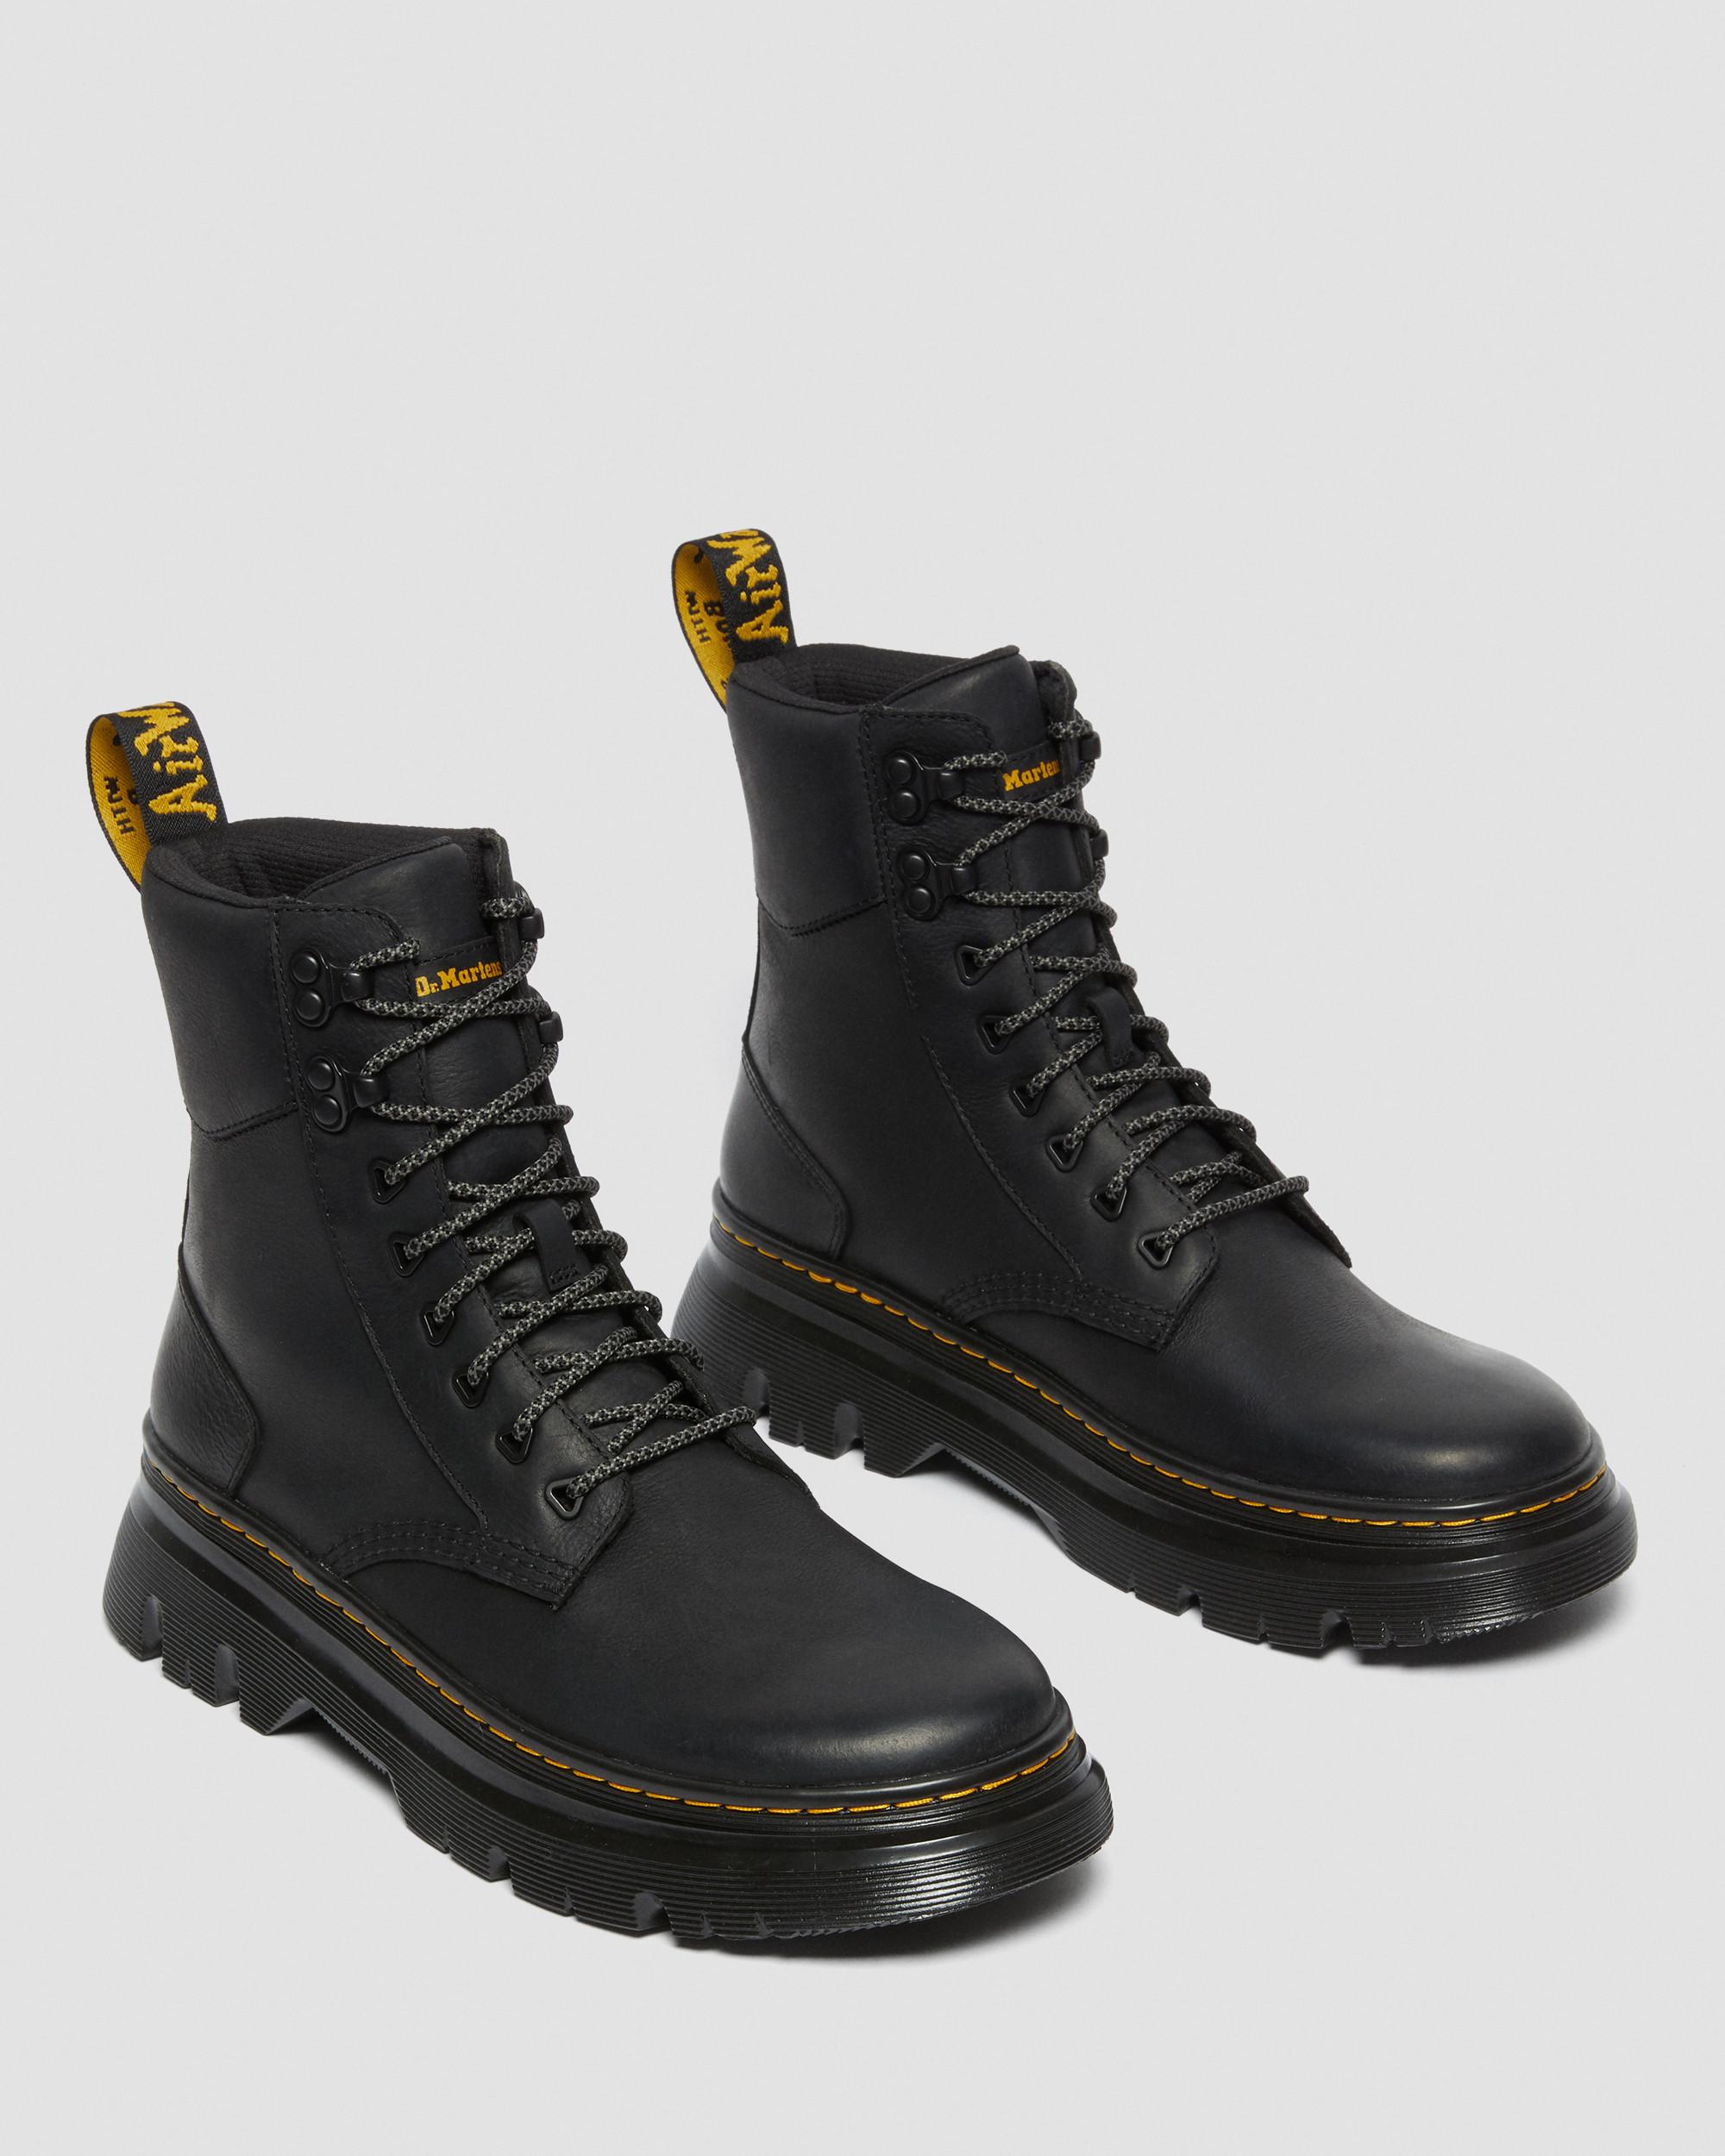 Tarik Wyoming Leather Utility Boots in Black